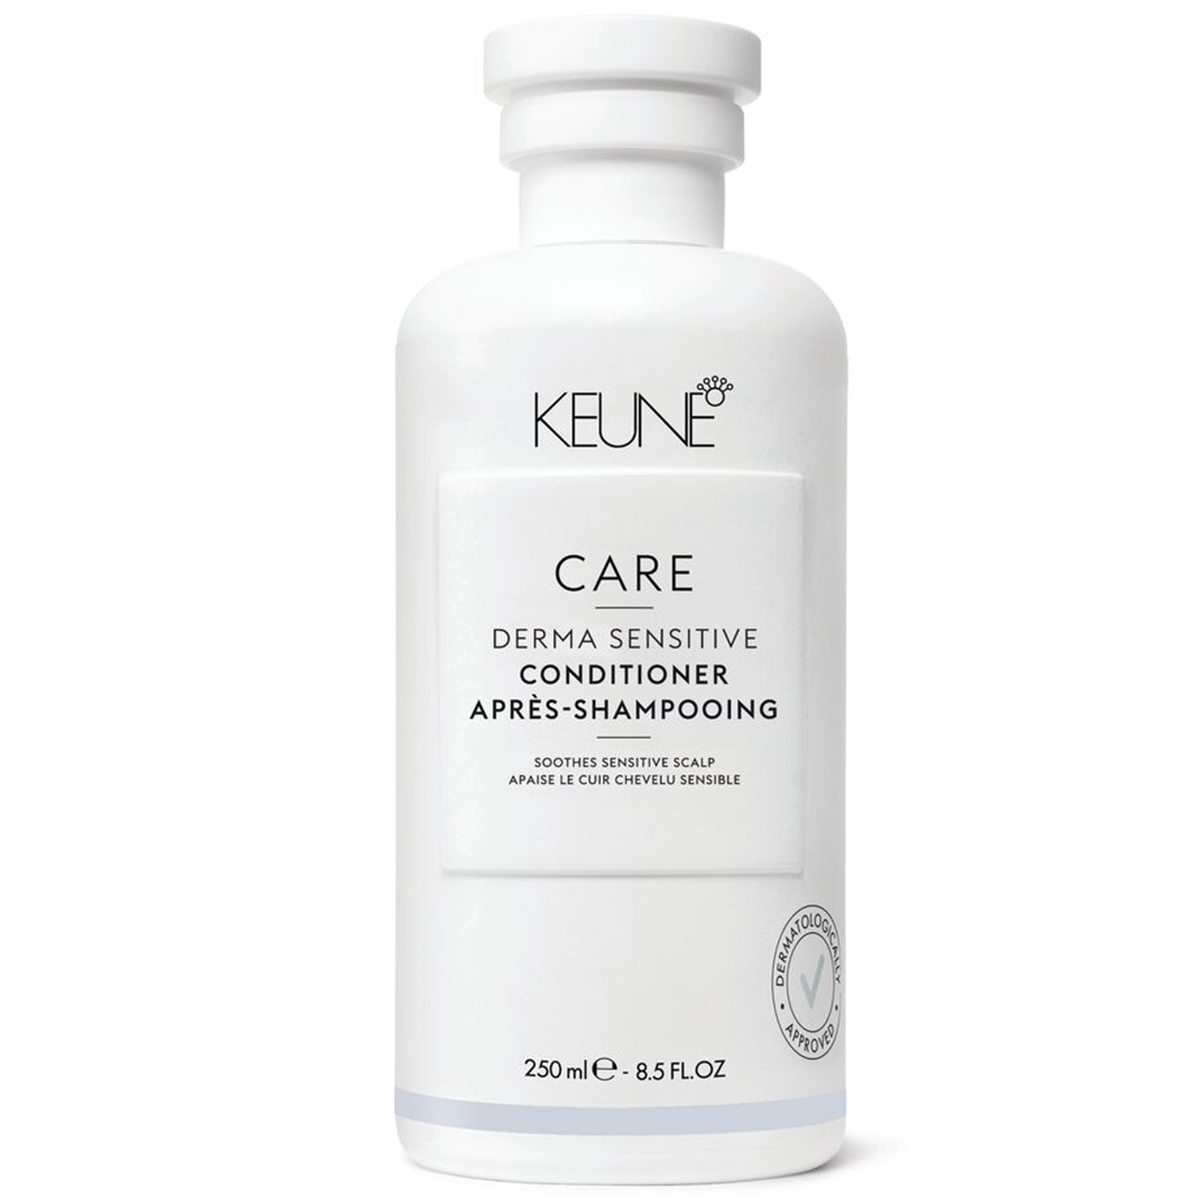 Keune Кондиционер для чувствительной кожи головы, 250 мл (Keune, Care) keune care derma sensitive conditioner кондиционер для чувствительной кожи головы 250 мл